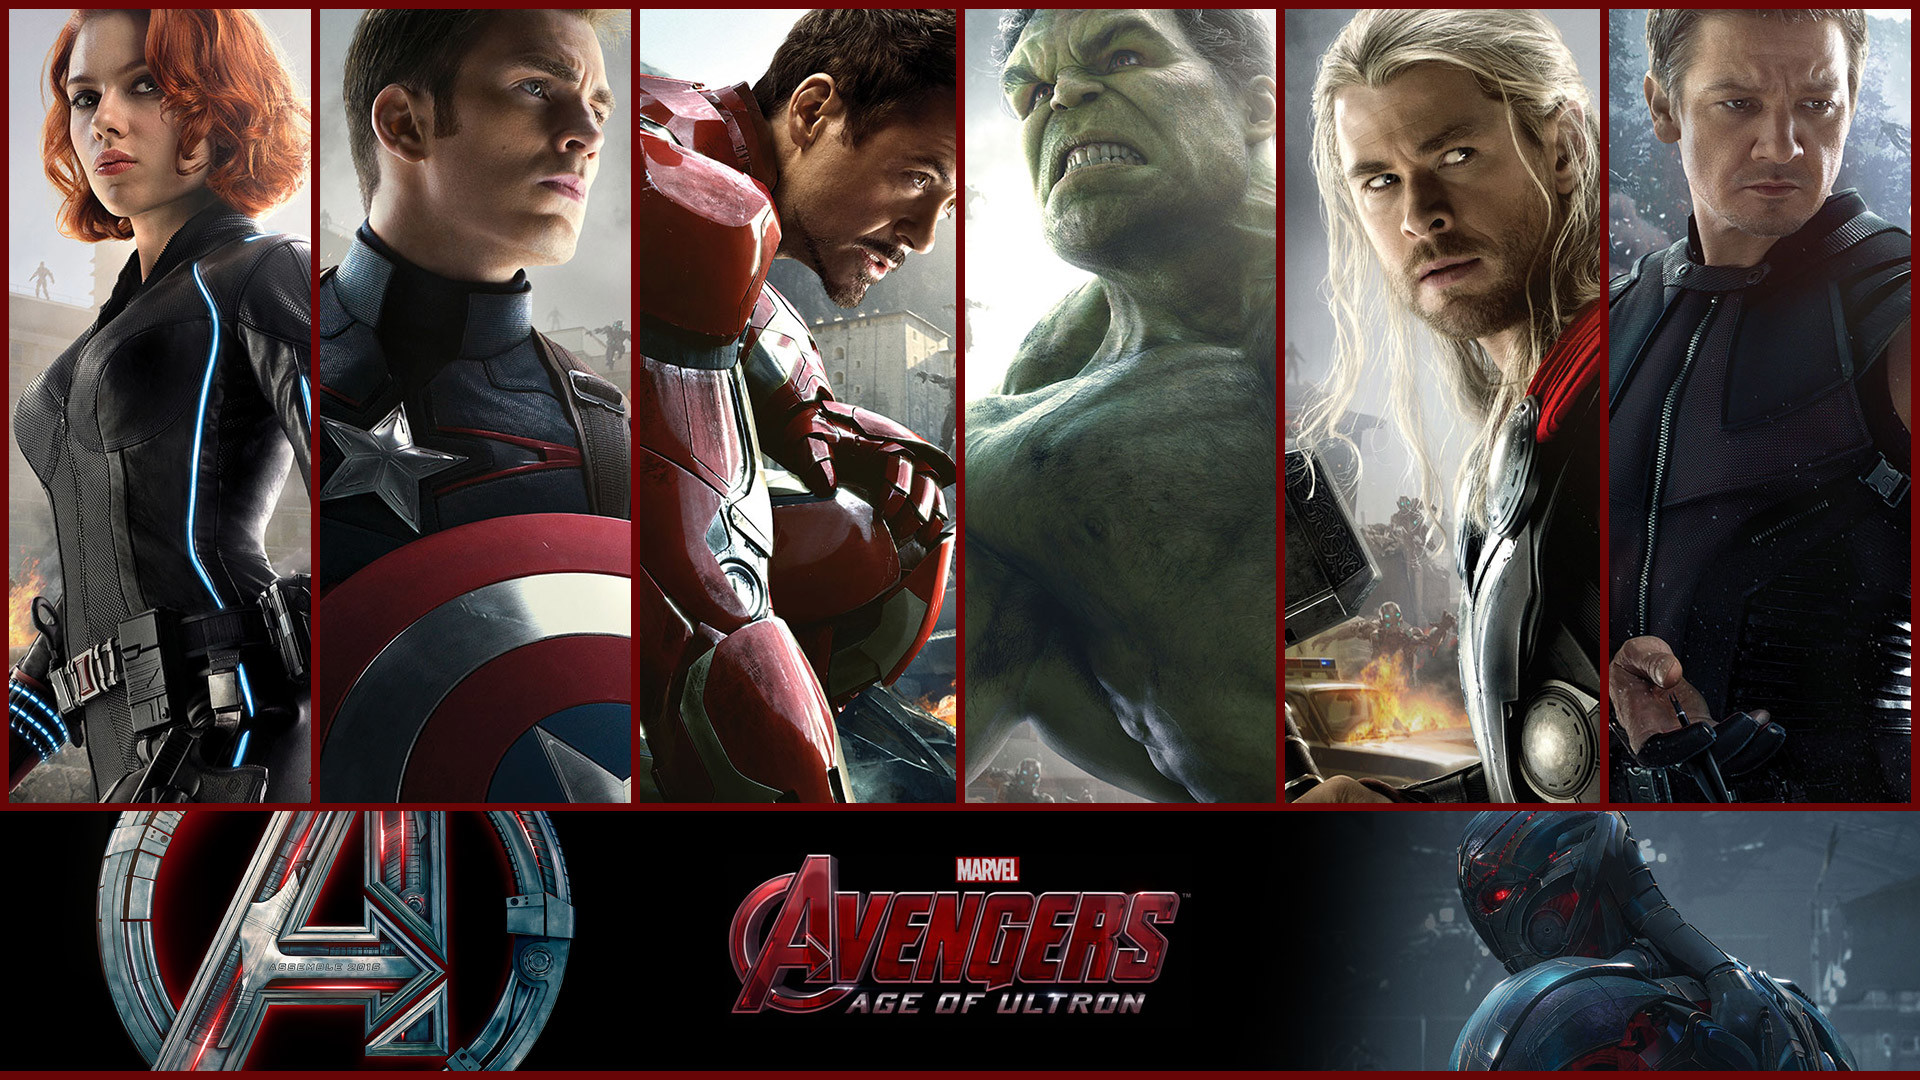 Avengers Age of Ultron  Ironman vs Captain America 4K wallpaper download